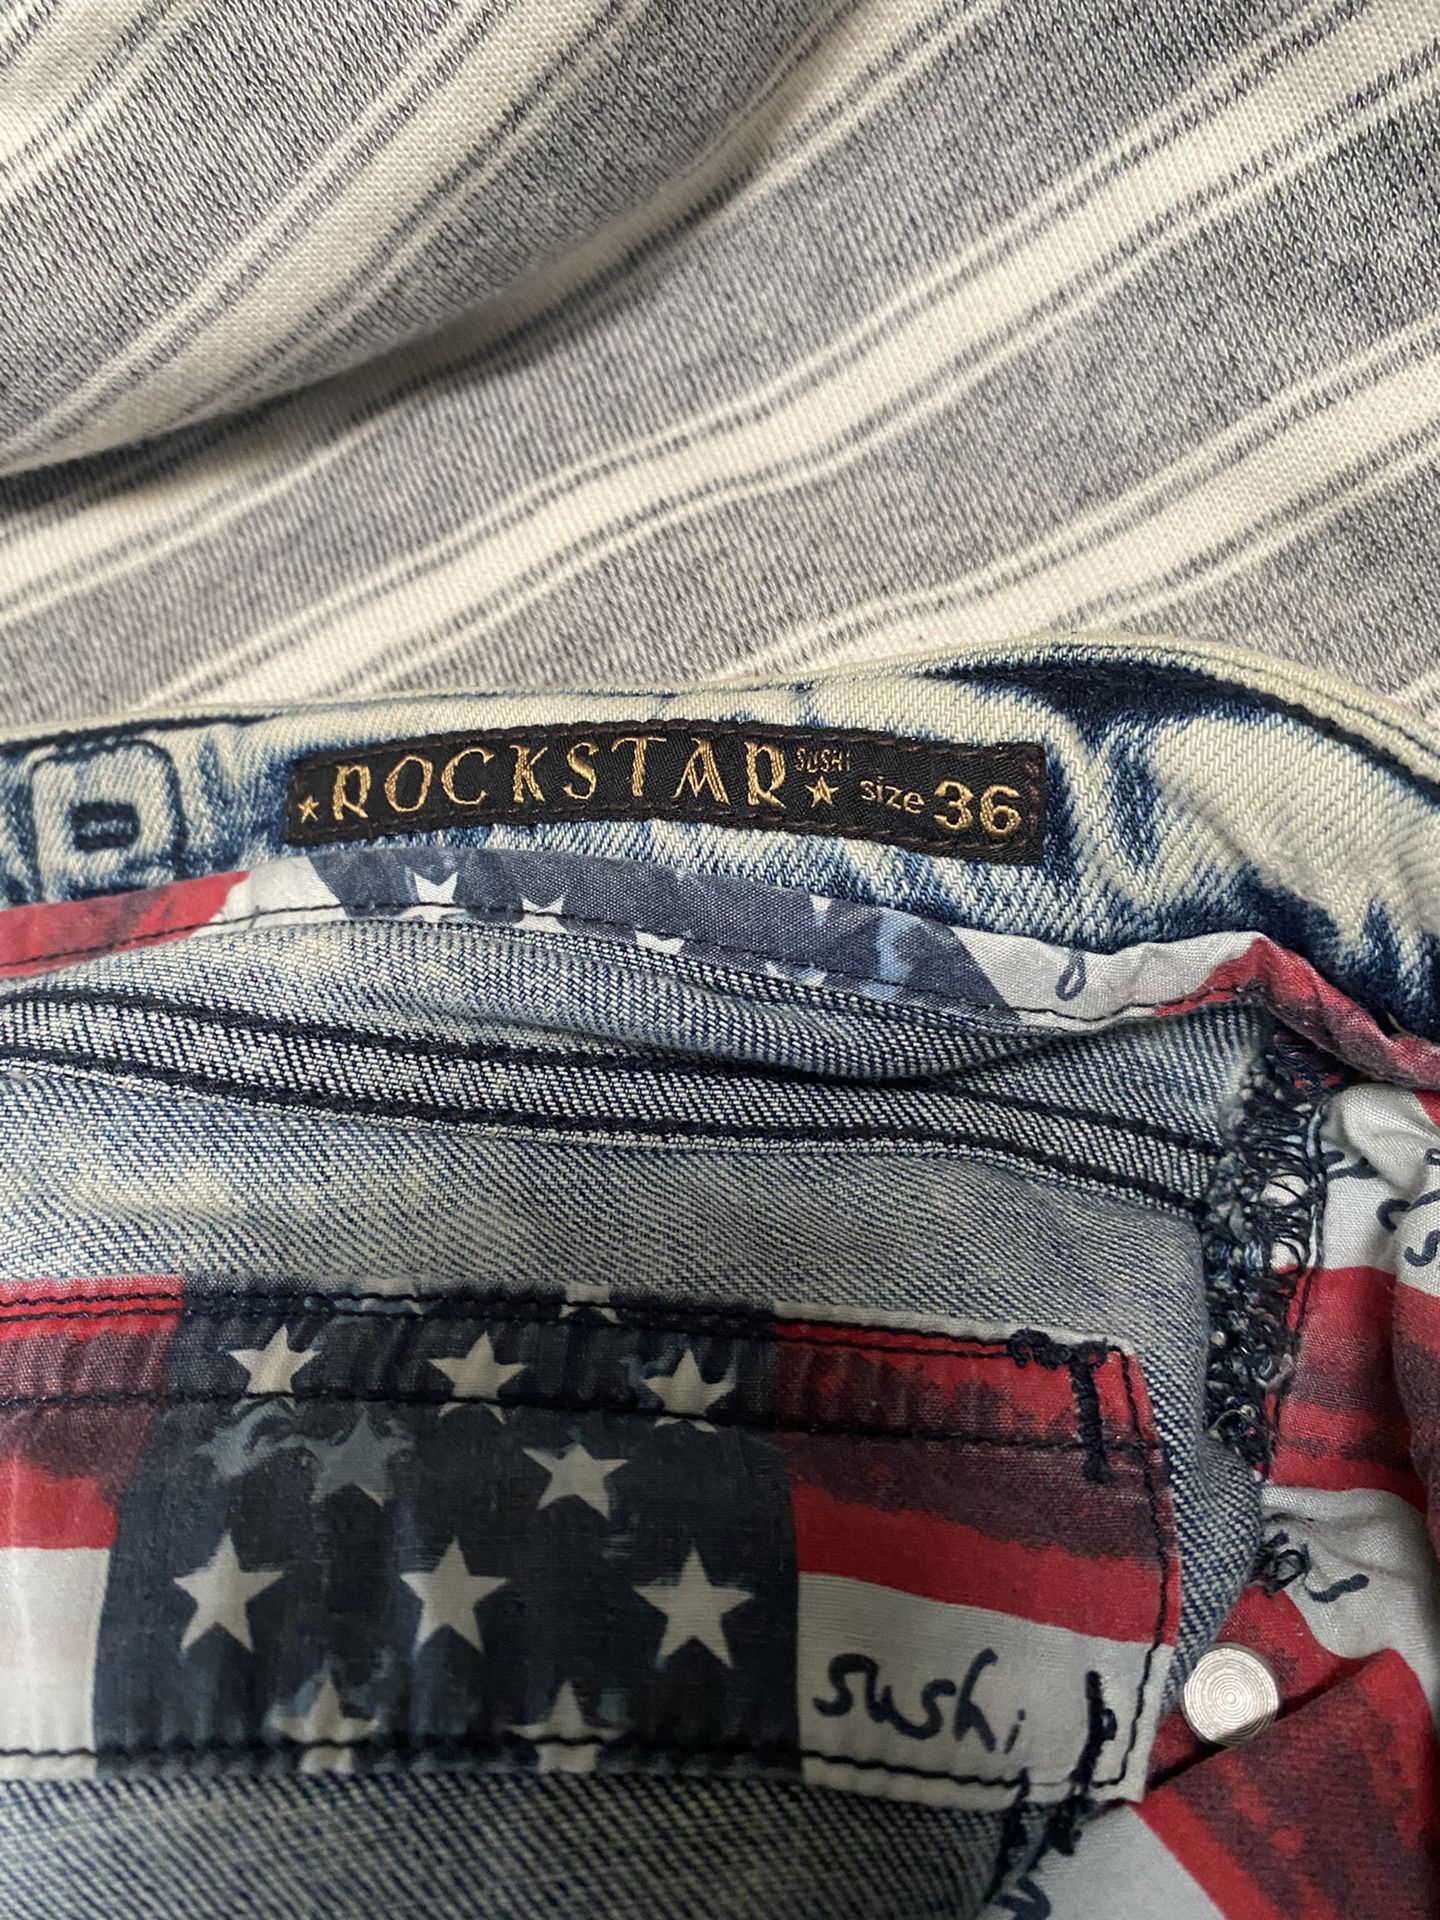 Rockstar Jeans Size 3630 for Sale in Oakland, CA - OfferUp